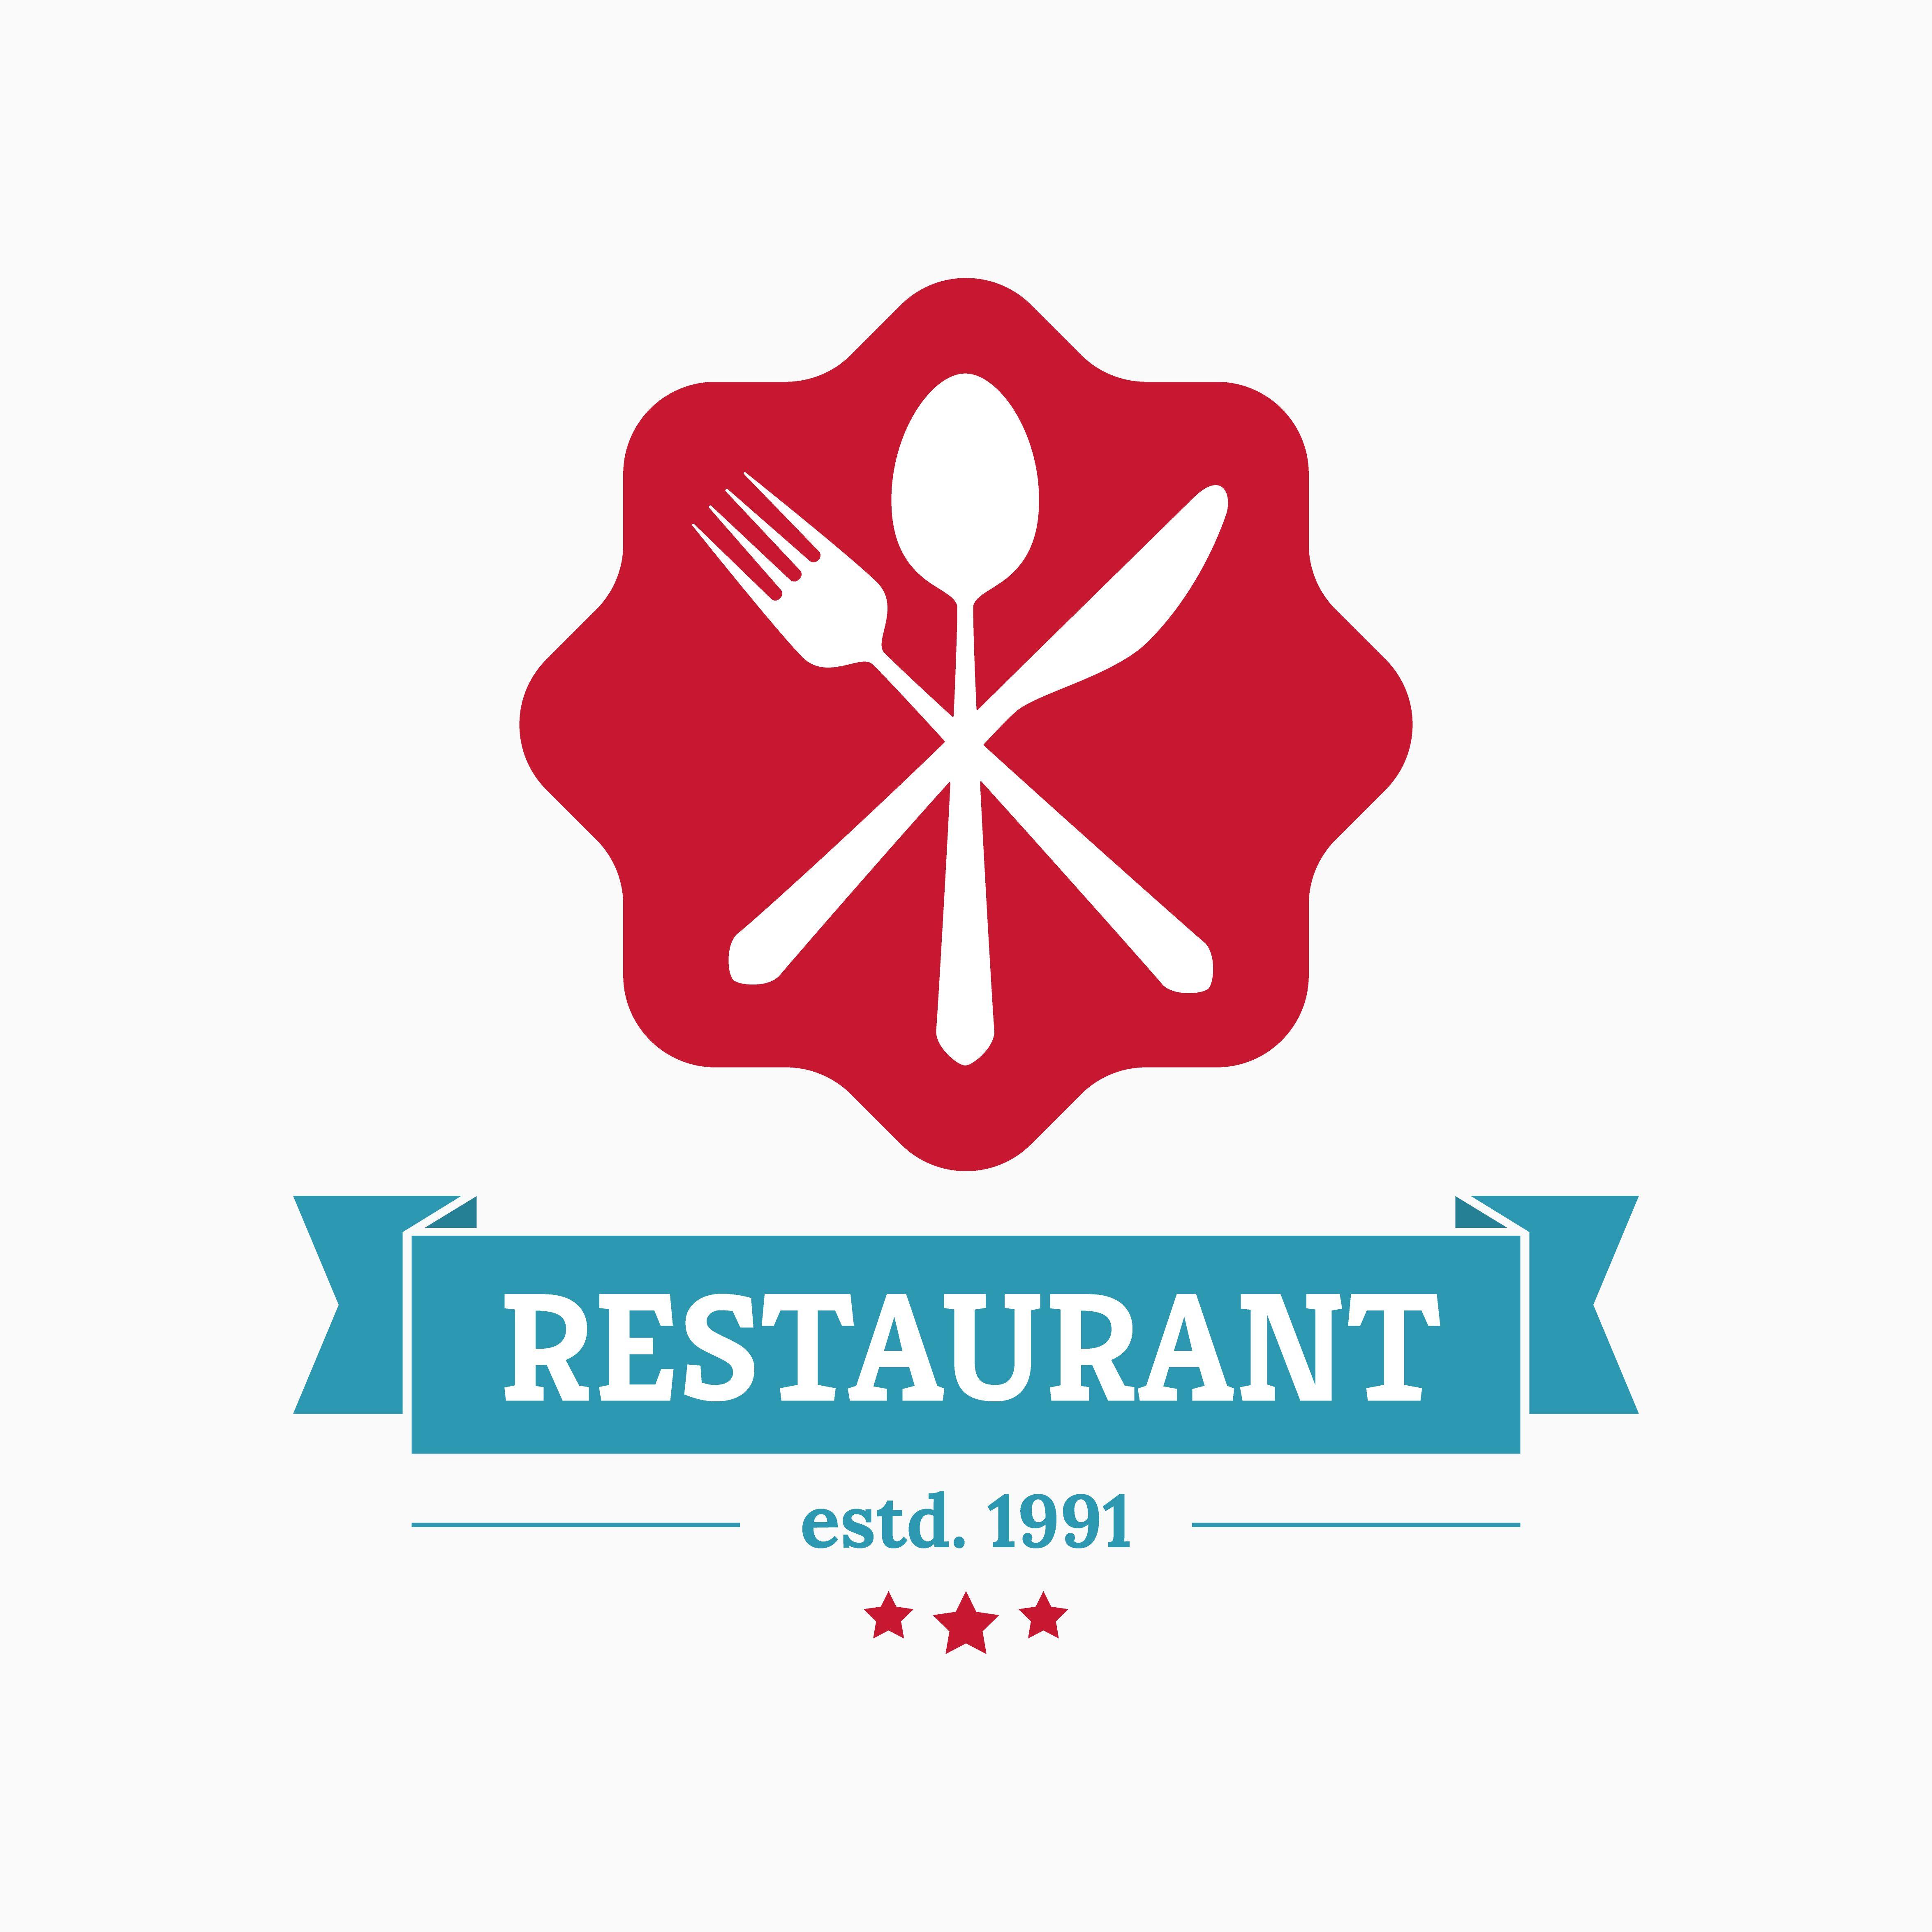 Restaruant Logo - Los Angeles Restaurant Logo Design | brandinglosangeles.com